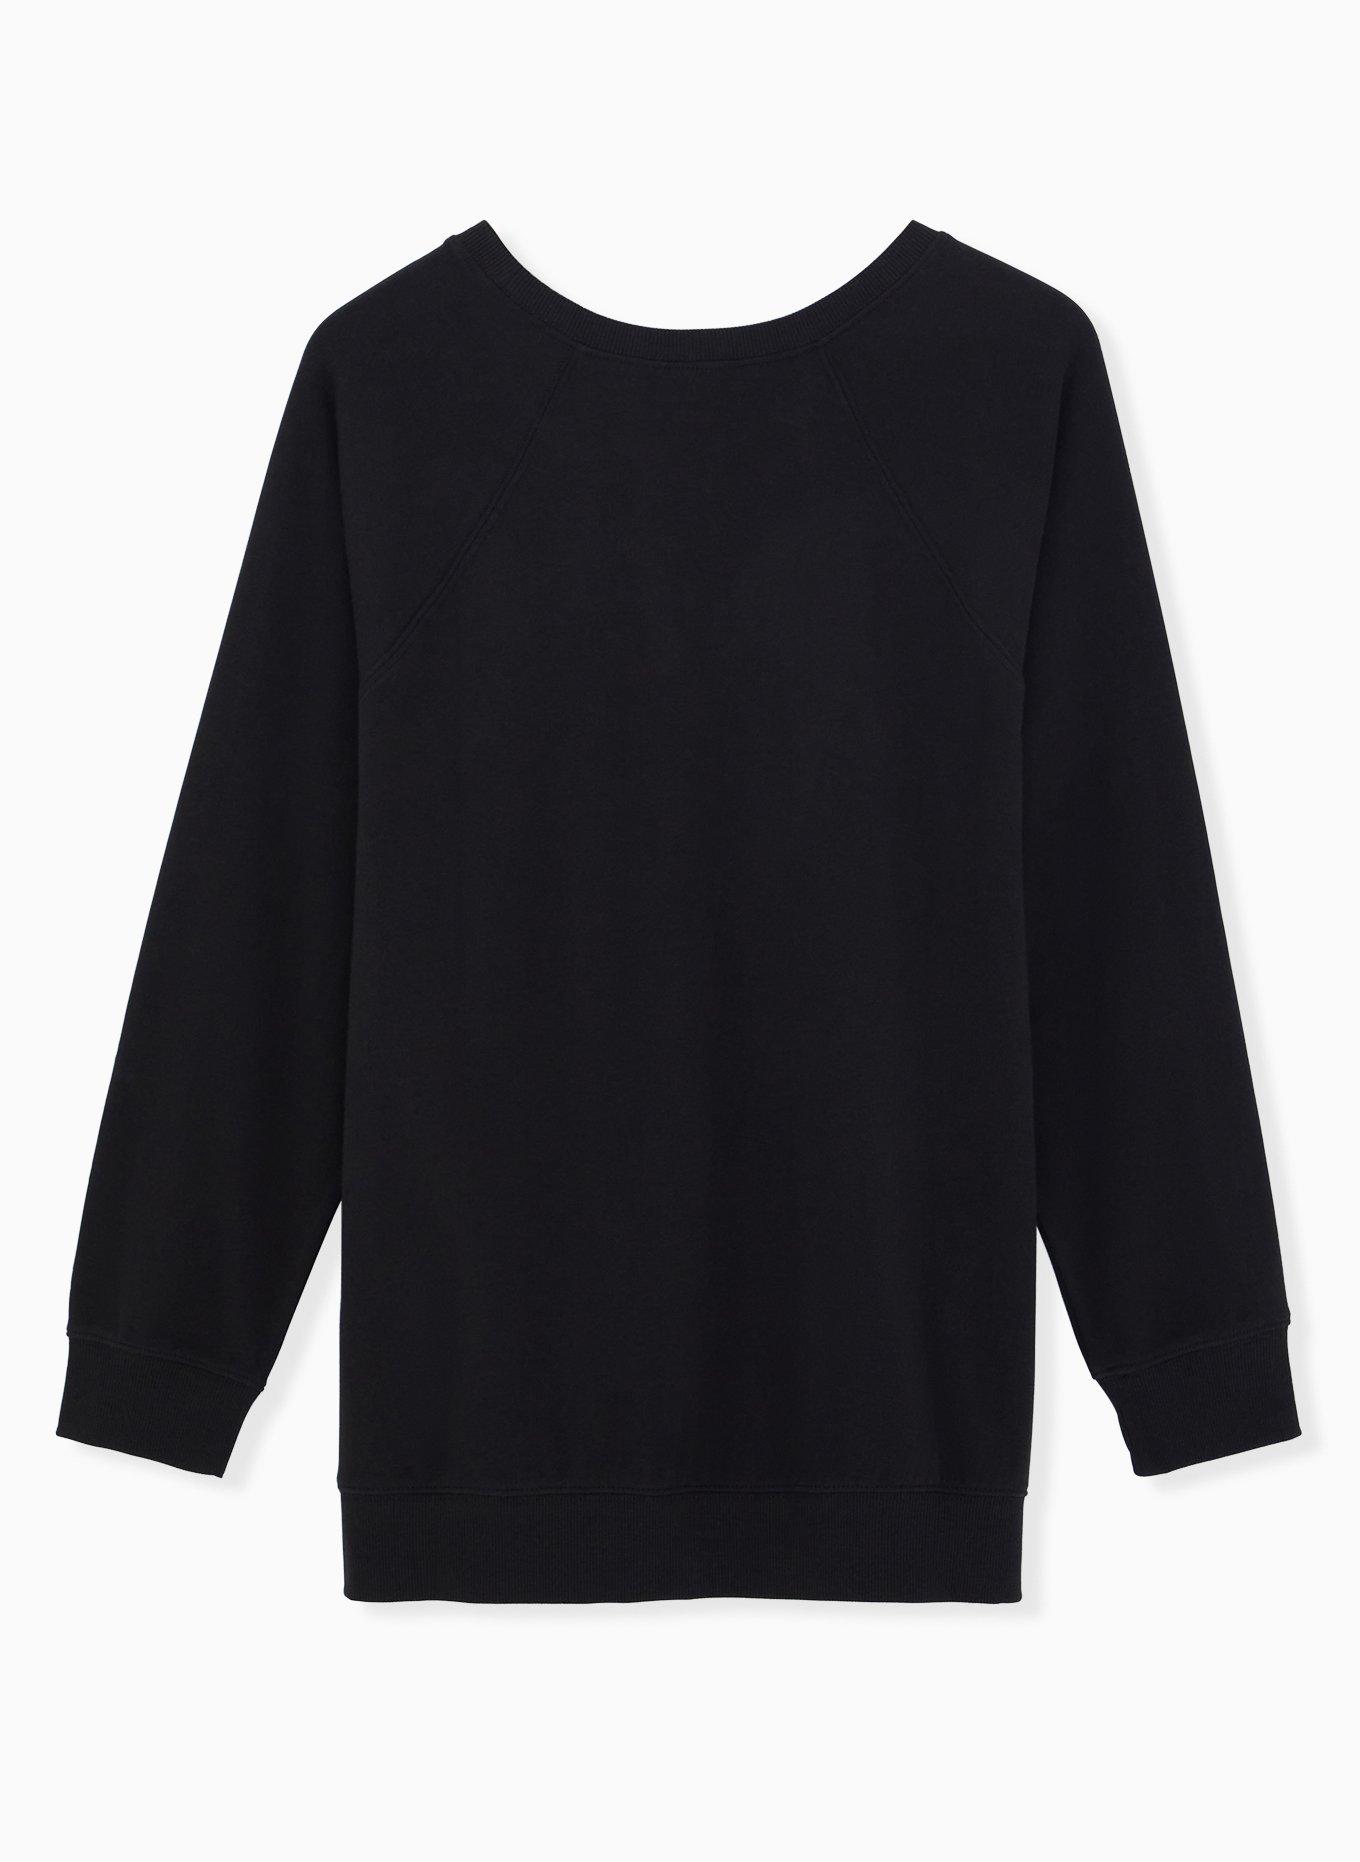 Plus Size - Black Fleece Embellished Santa Pug Holiday Sweatshirt - Torrid